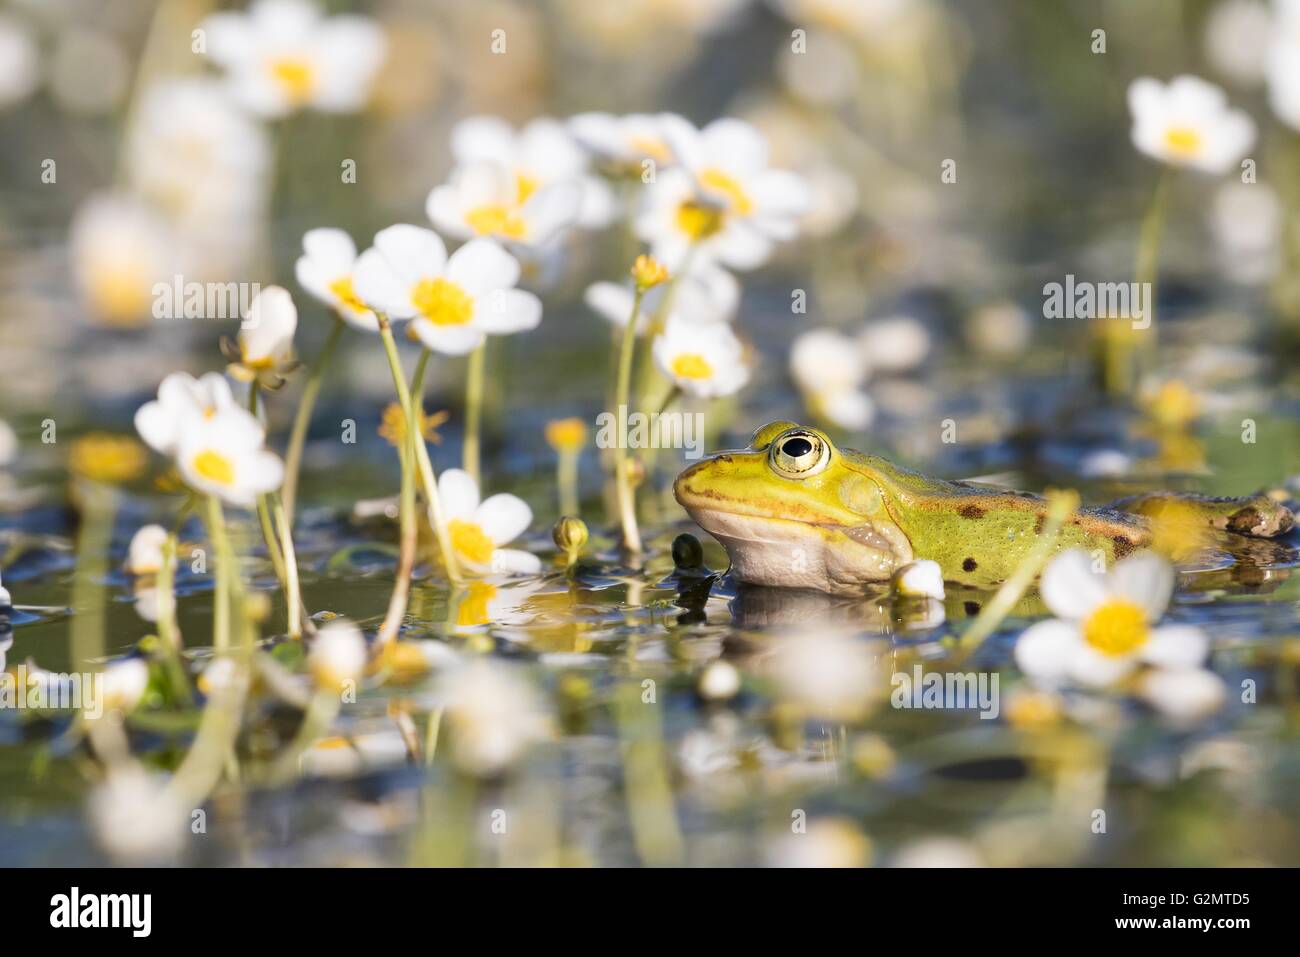 Edible frog (Pelophylax kl. esculentus) in pond amongst white water-crowfoot (Ranunculus aquatilis), Hesse, Germany Stock Photo